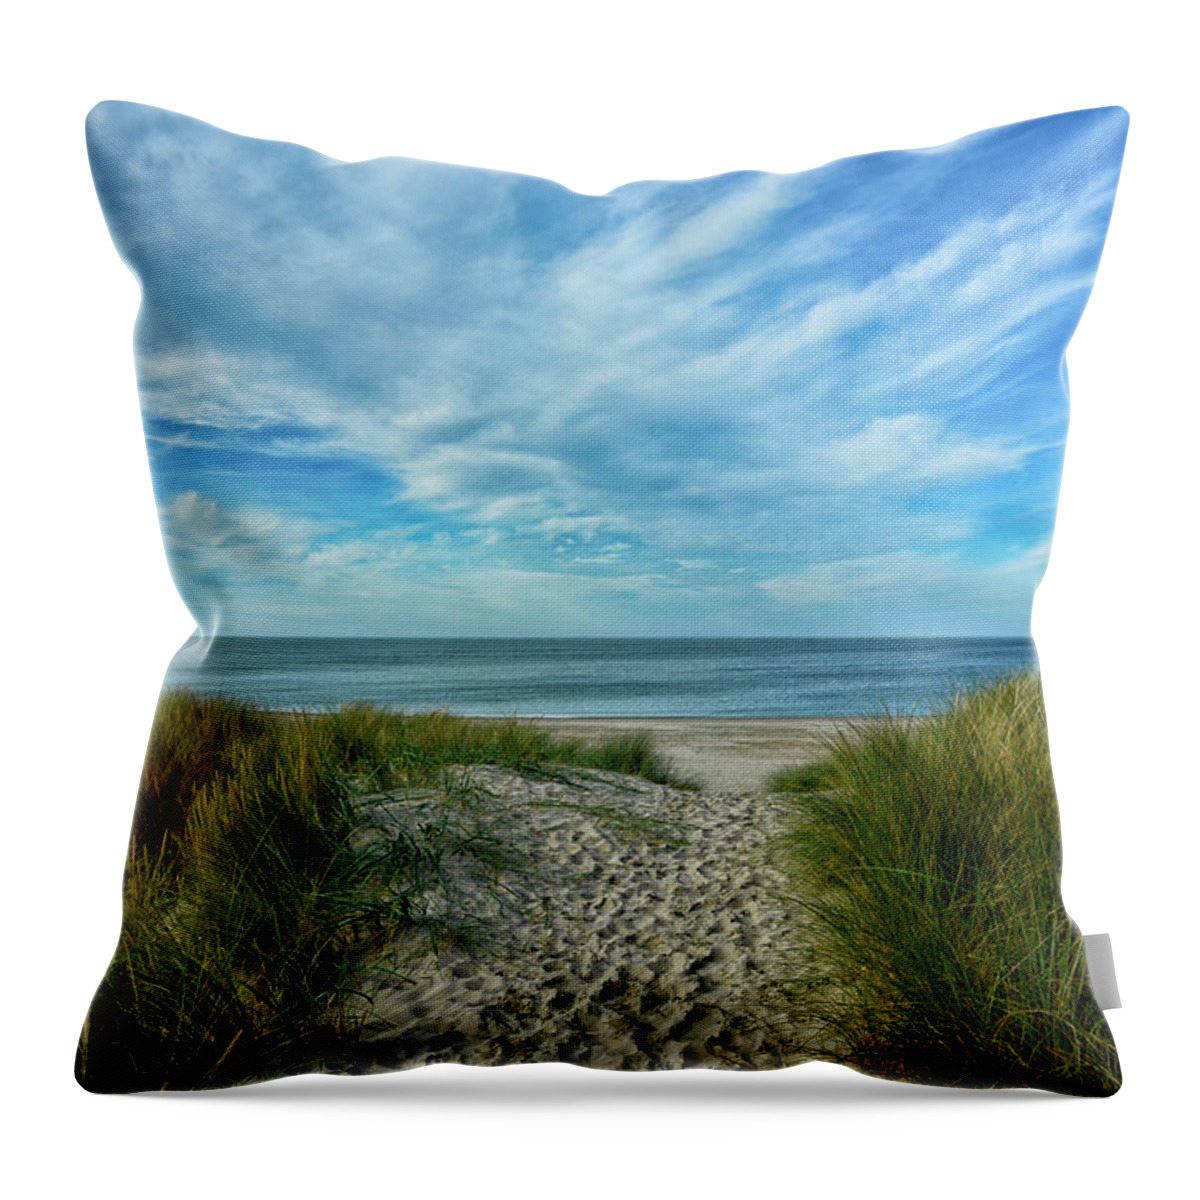 Horizon Over Water Throw Pillow featuring the photograph Way To The Beach by Joachim G Pinkawa